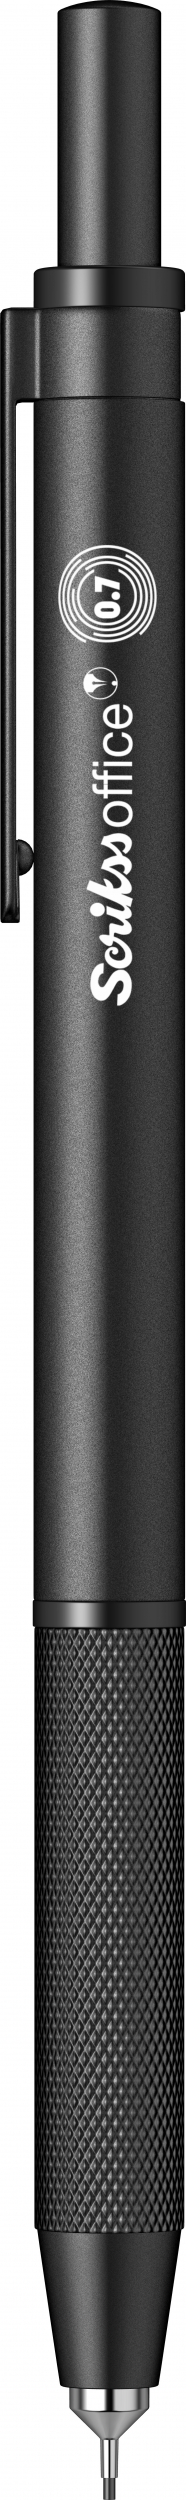 Механичен молив Scrikss Twist  0,7мм., модел 87364, Черен